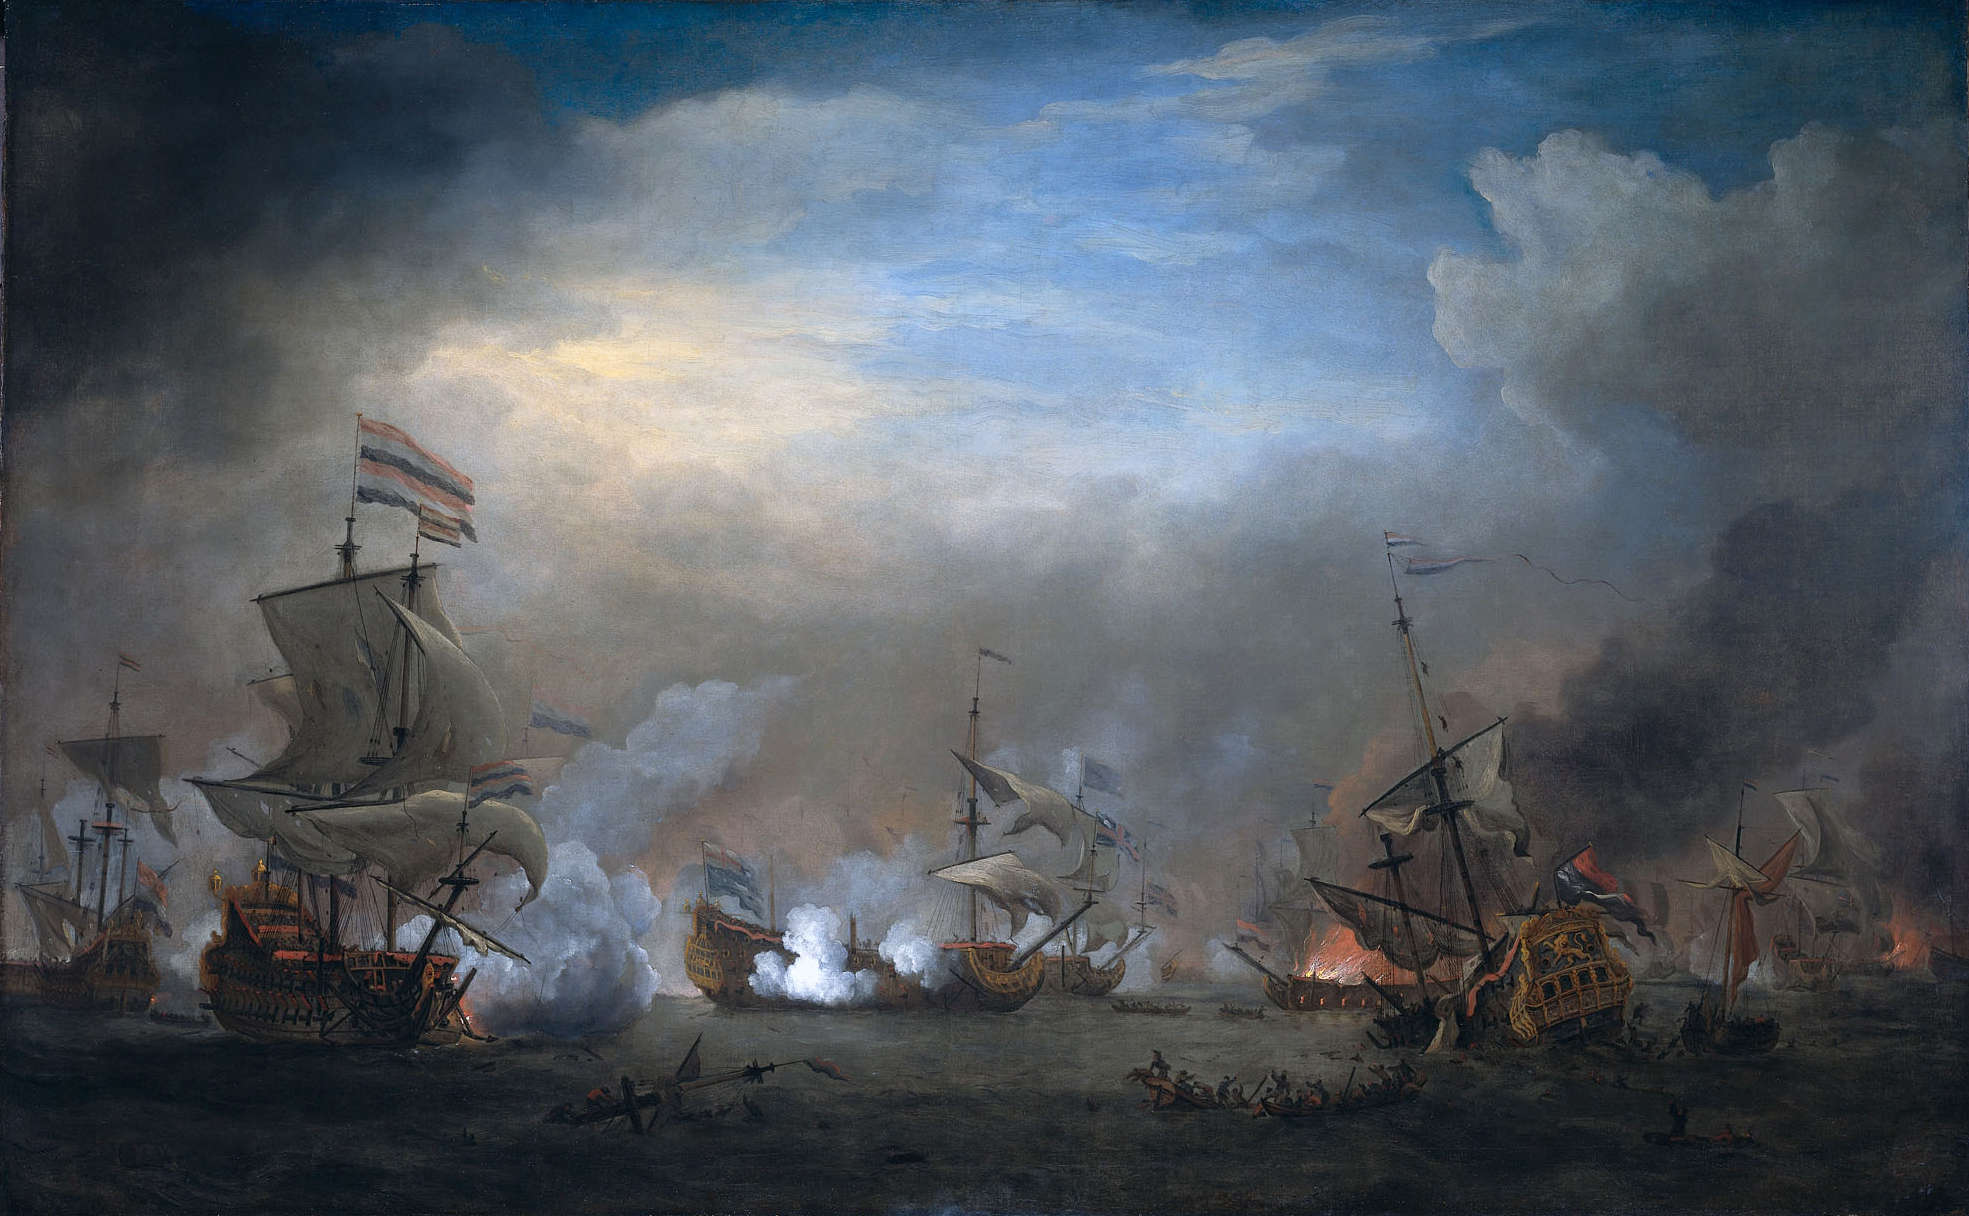 Royal Navy » History of the Sailing Warship in the Marine Art: